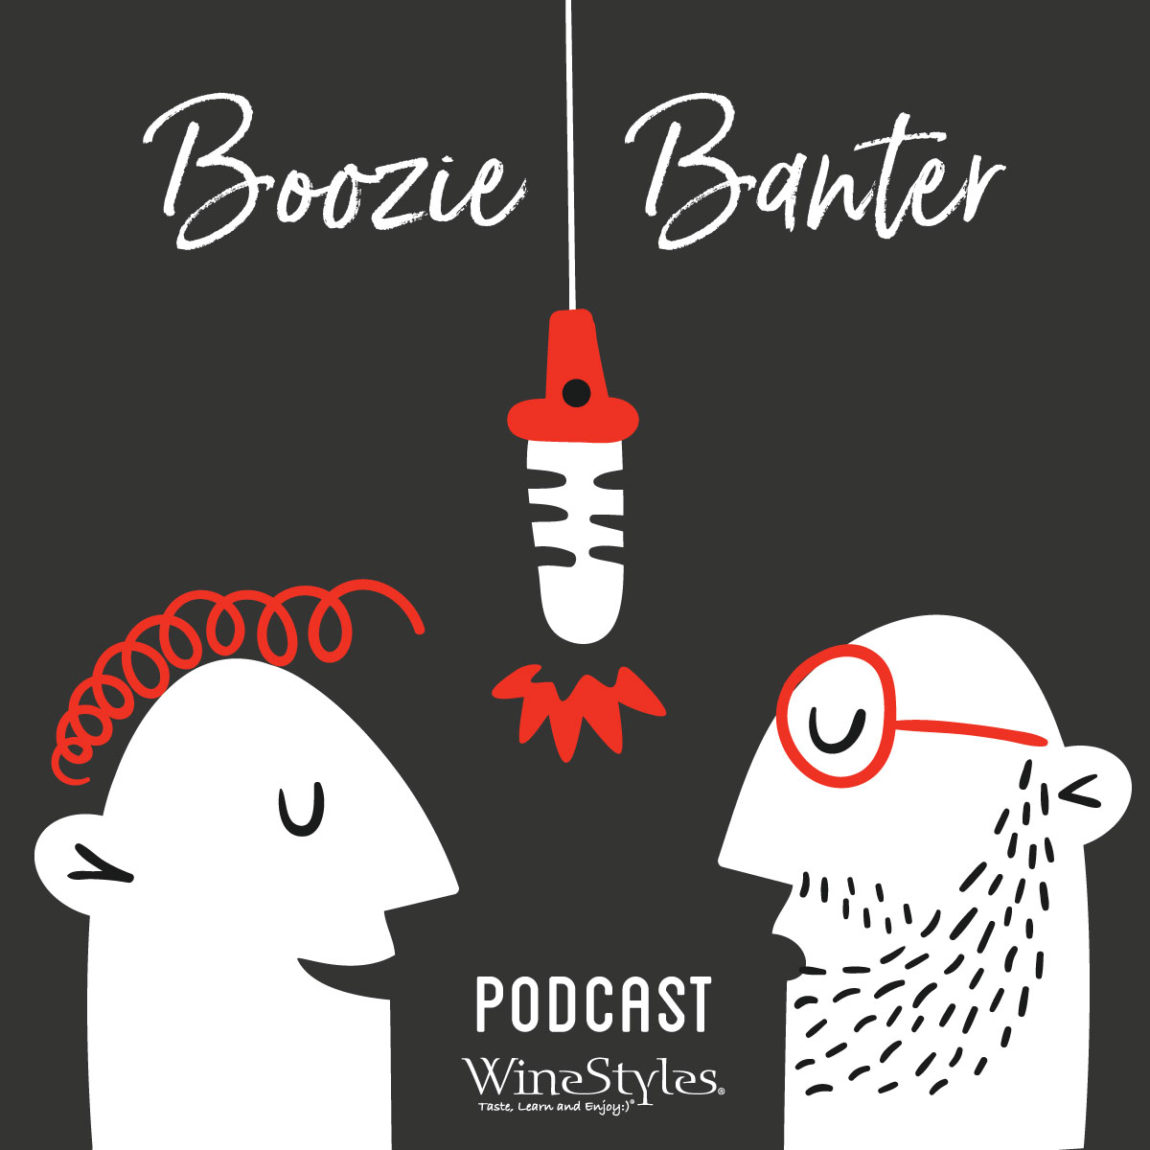 Boozie Banter logo